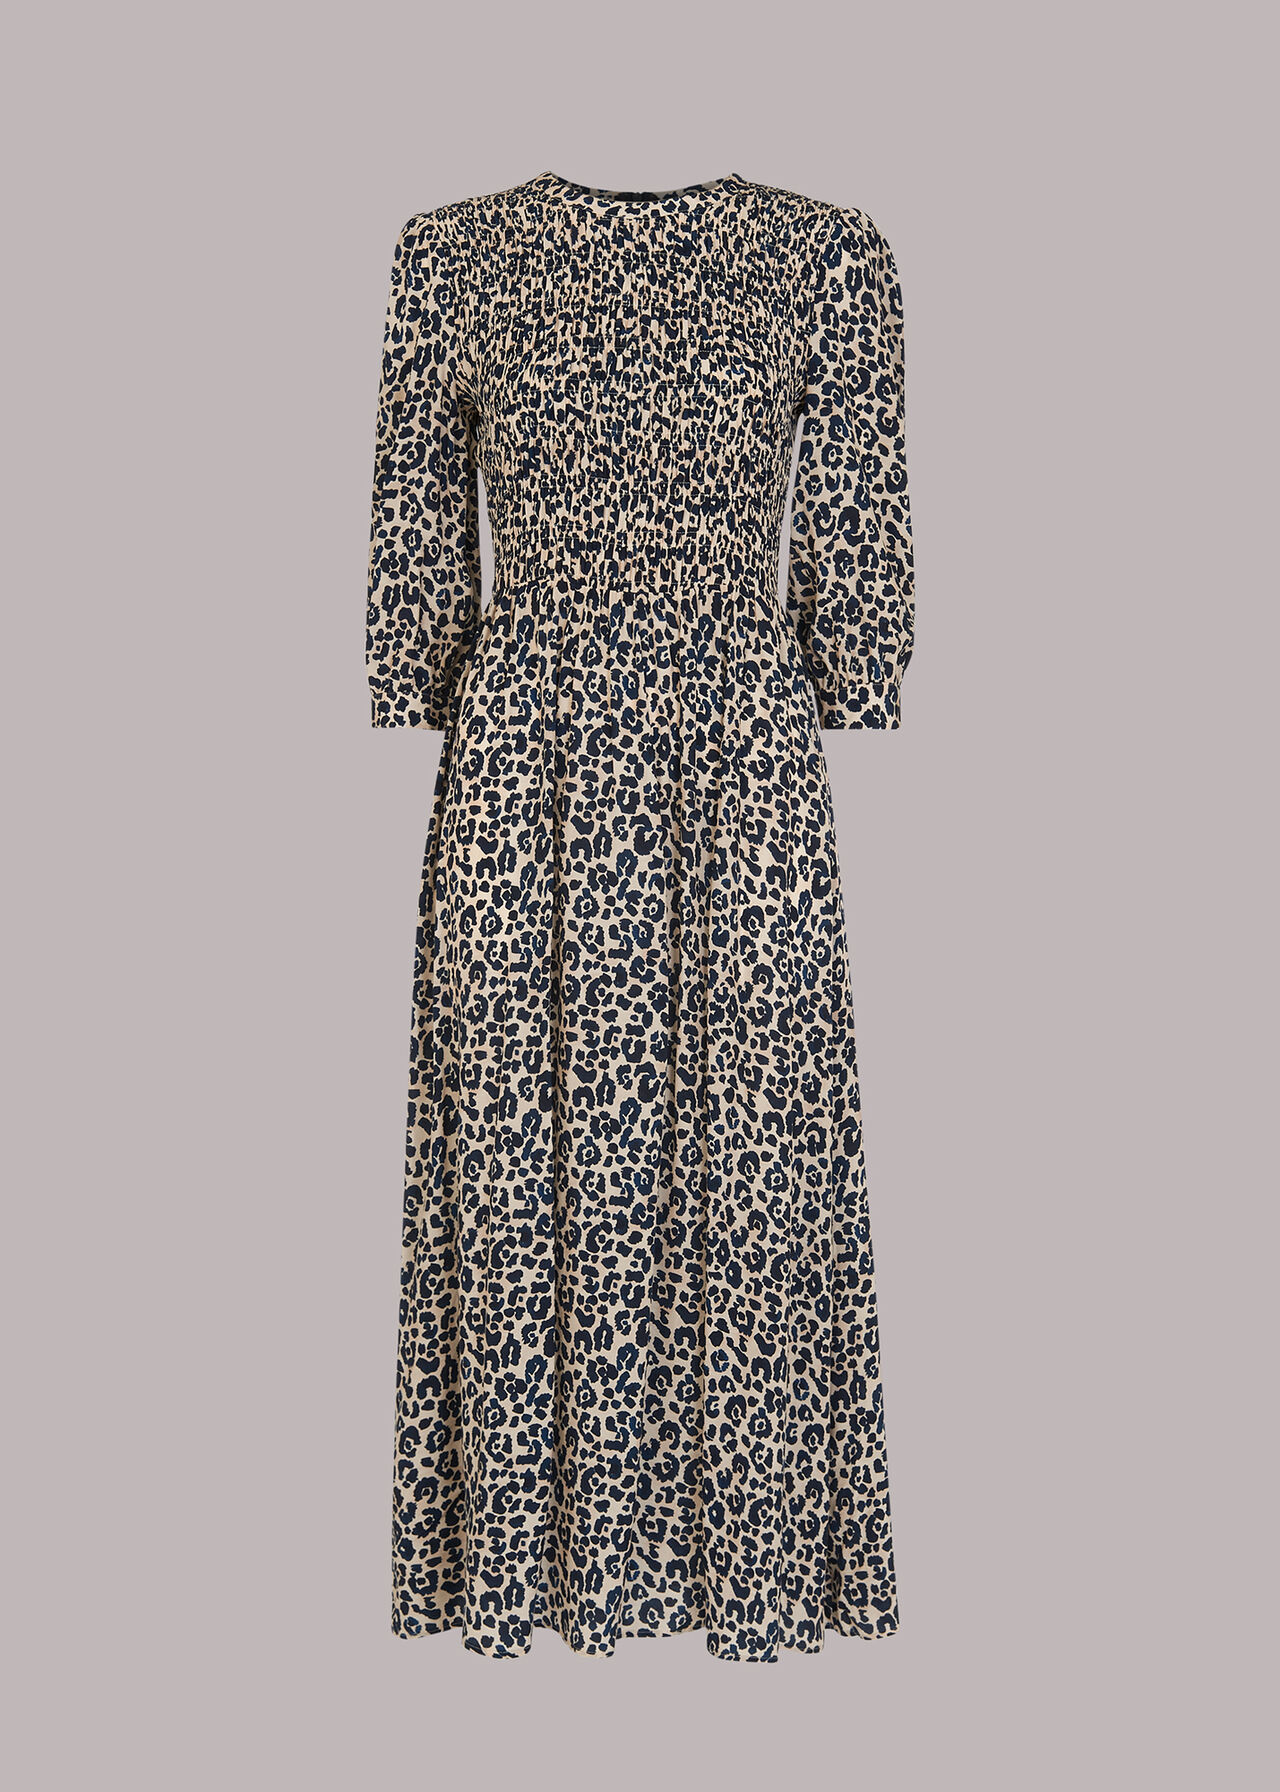 Leopard Print Cheetah Print Shirred Dress | WHISTLES